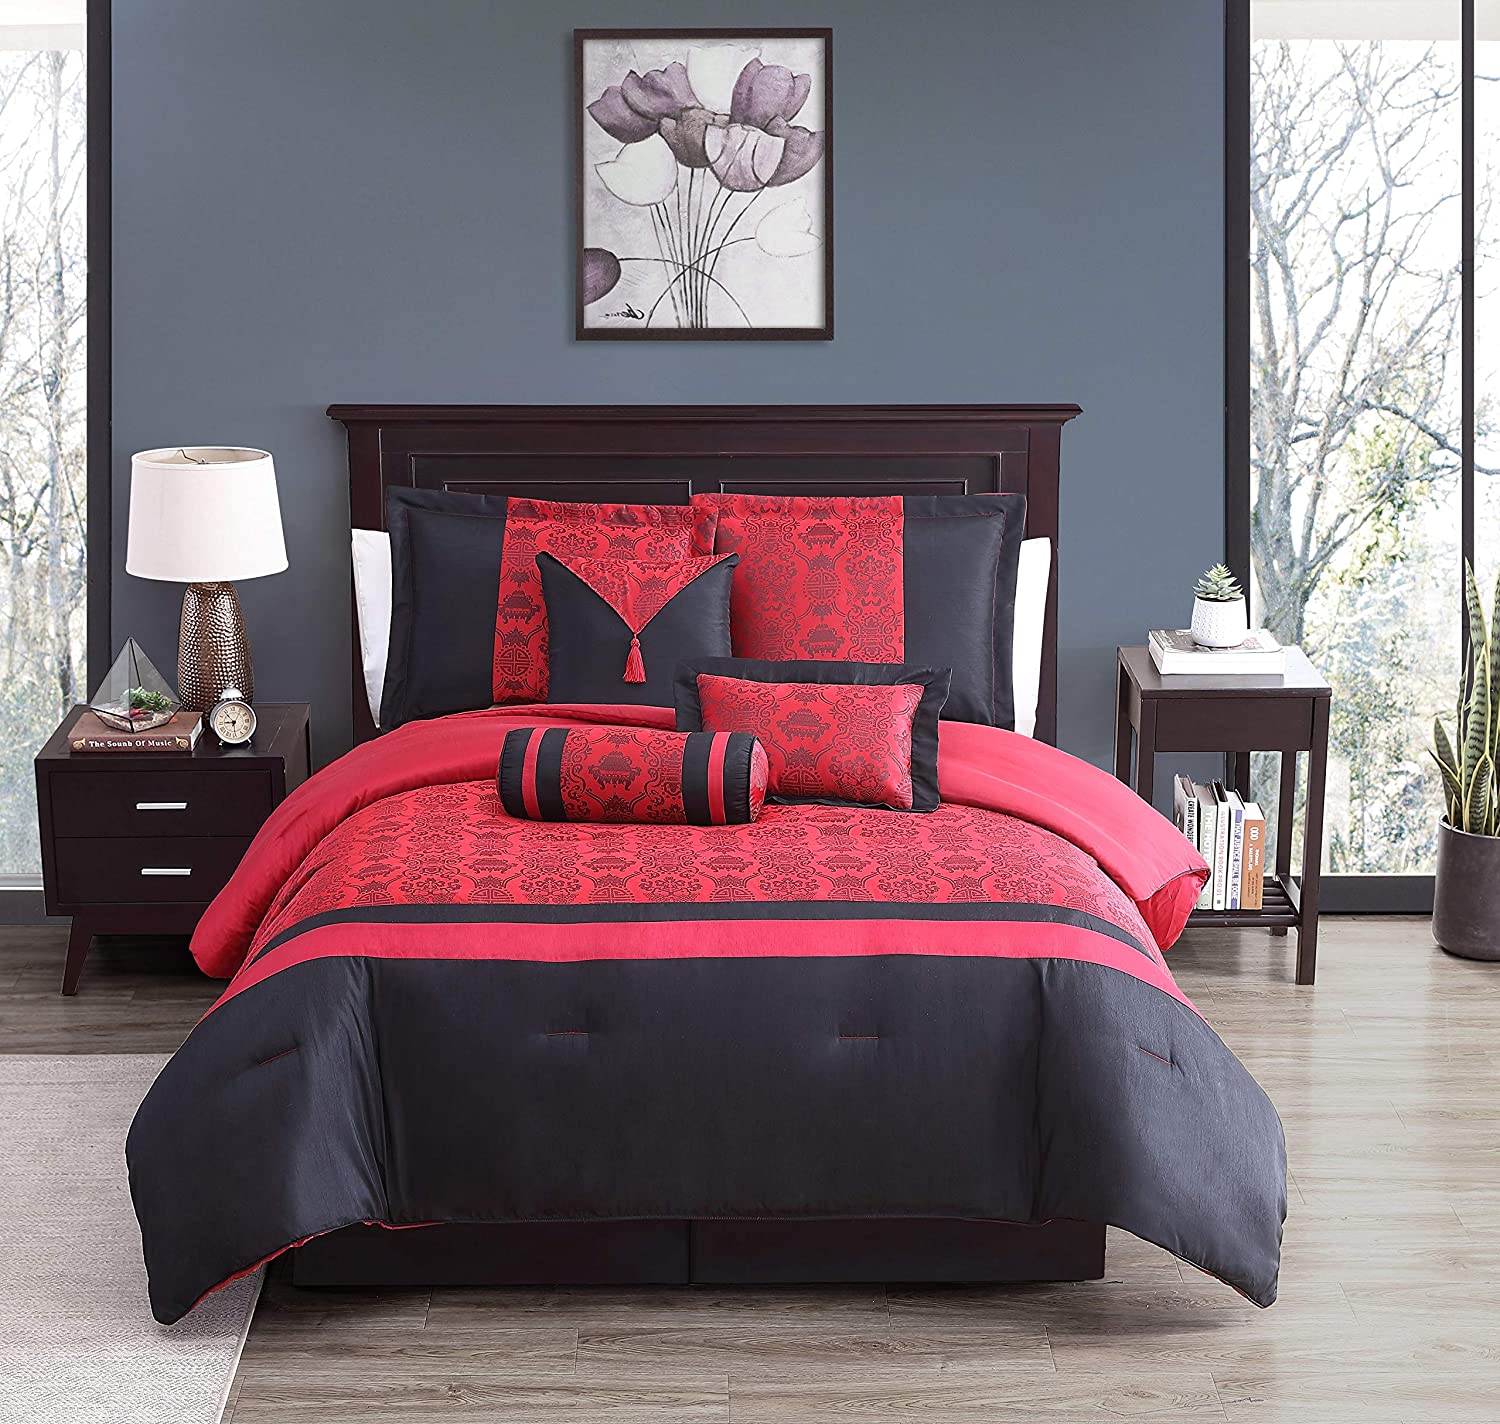 Piece Comforter Set King Size, Black And Red Bedding Sets King